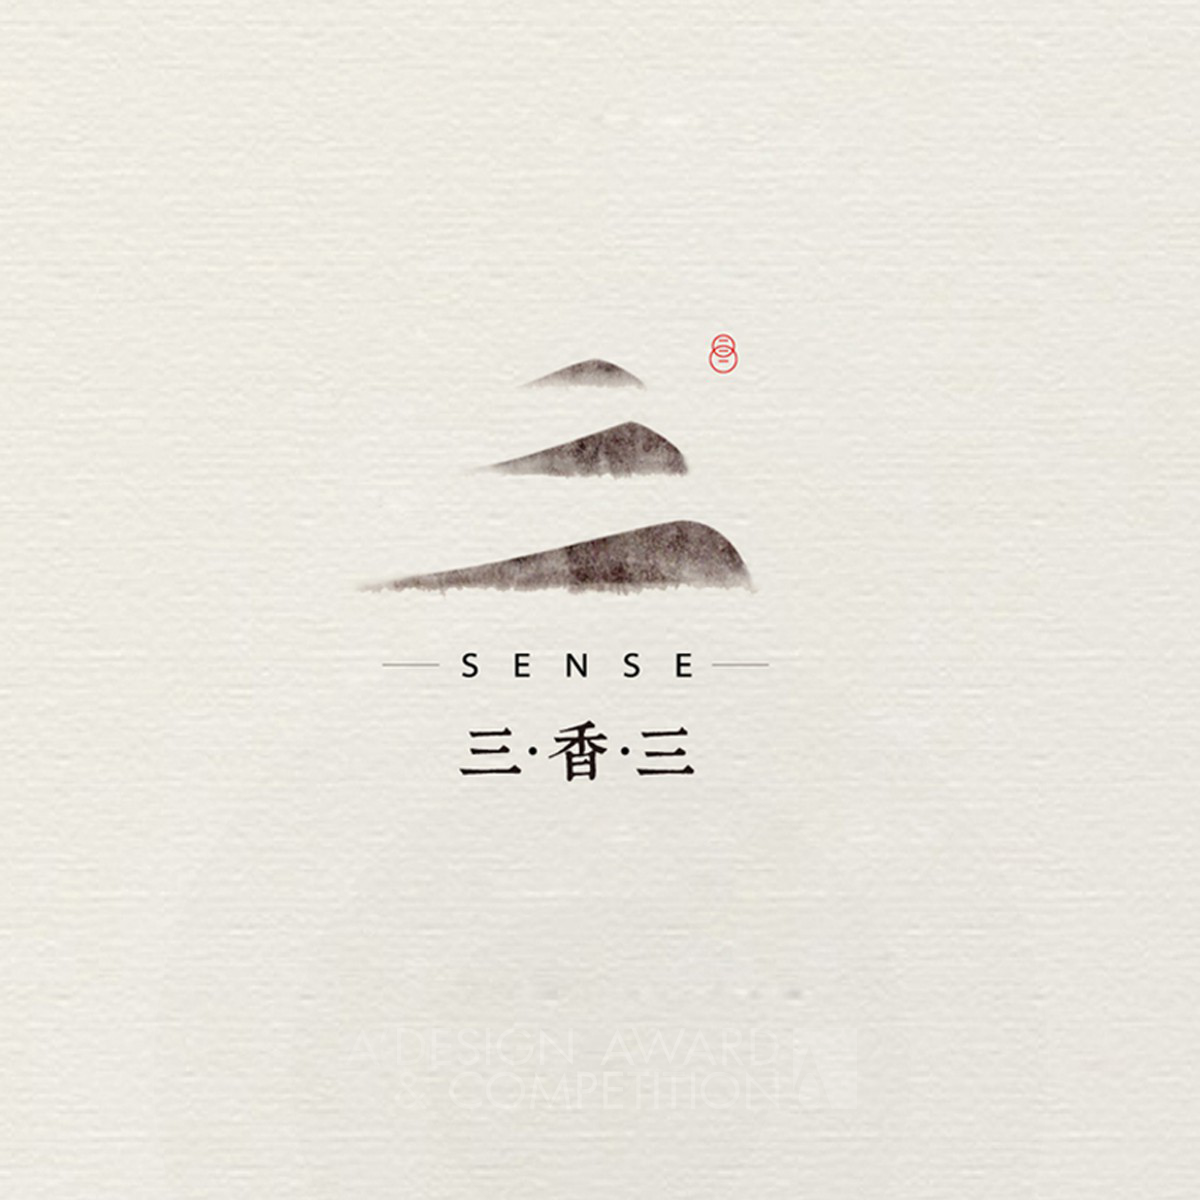 Sense logo by Dongdao Creative Branding Group